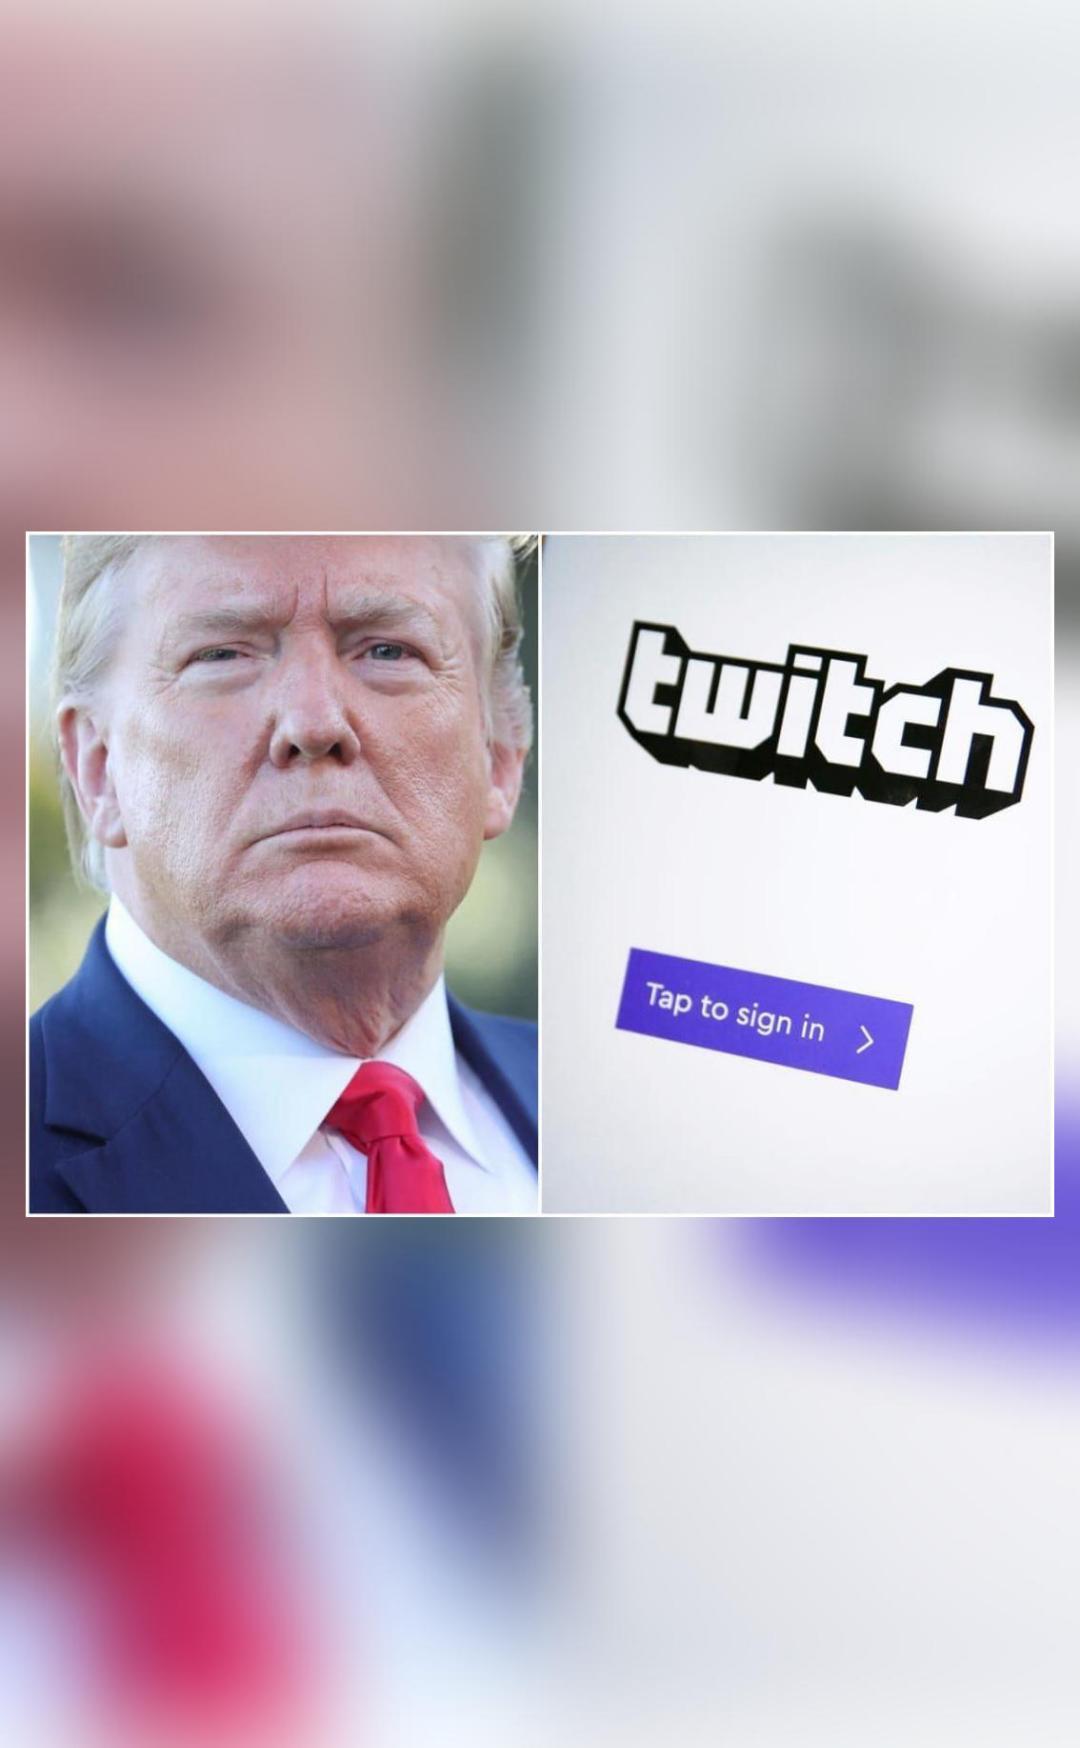 Twitch restores Trump's account after suspending it over 'hateful